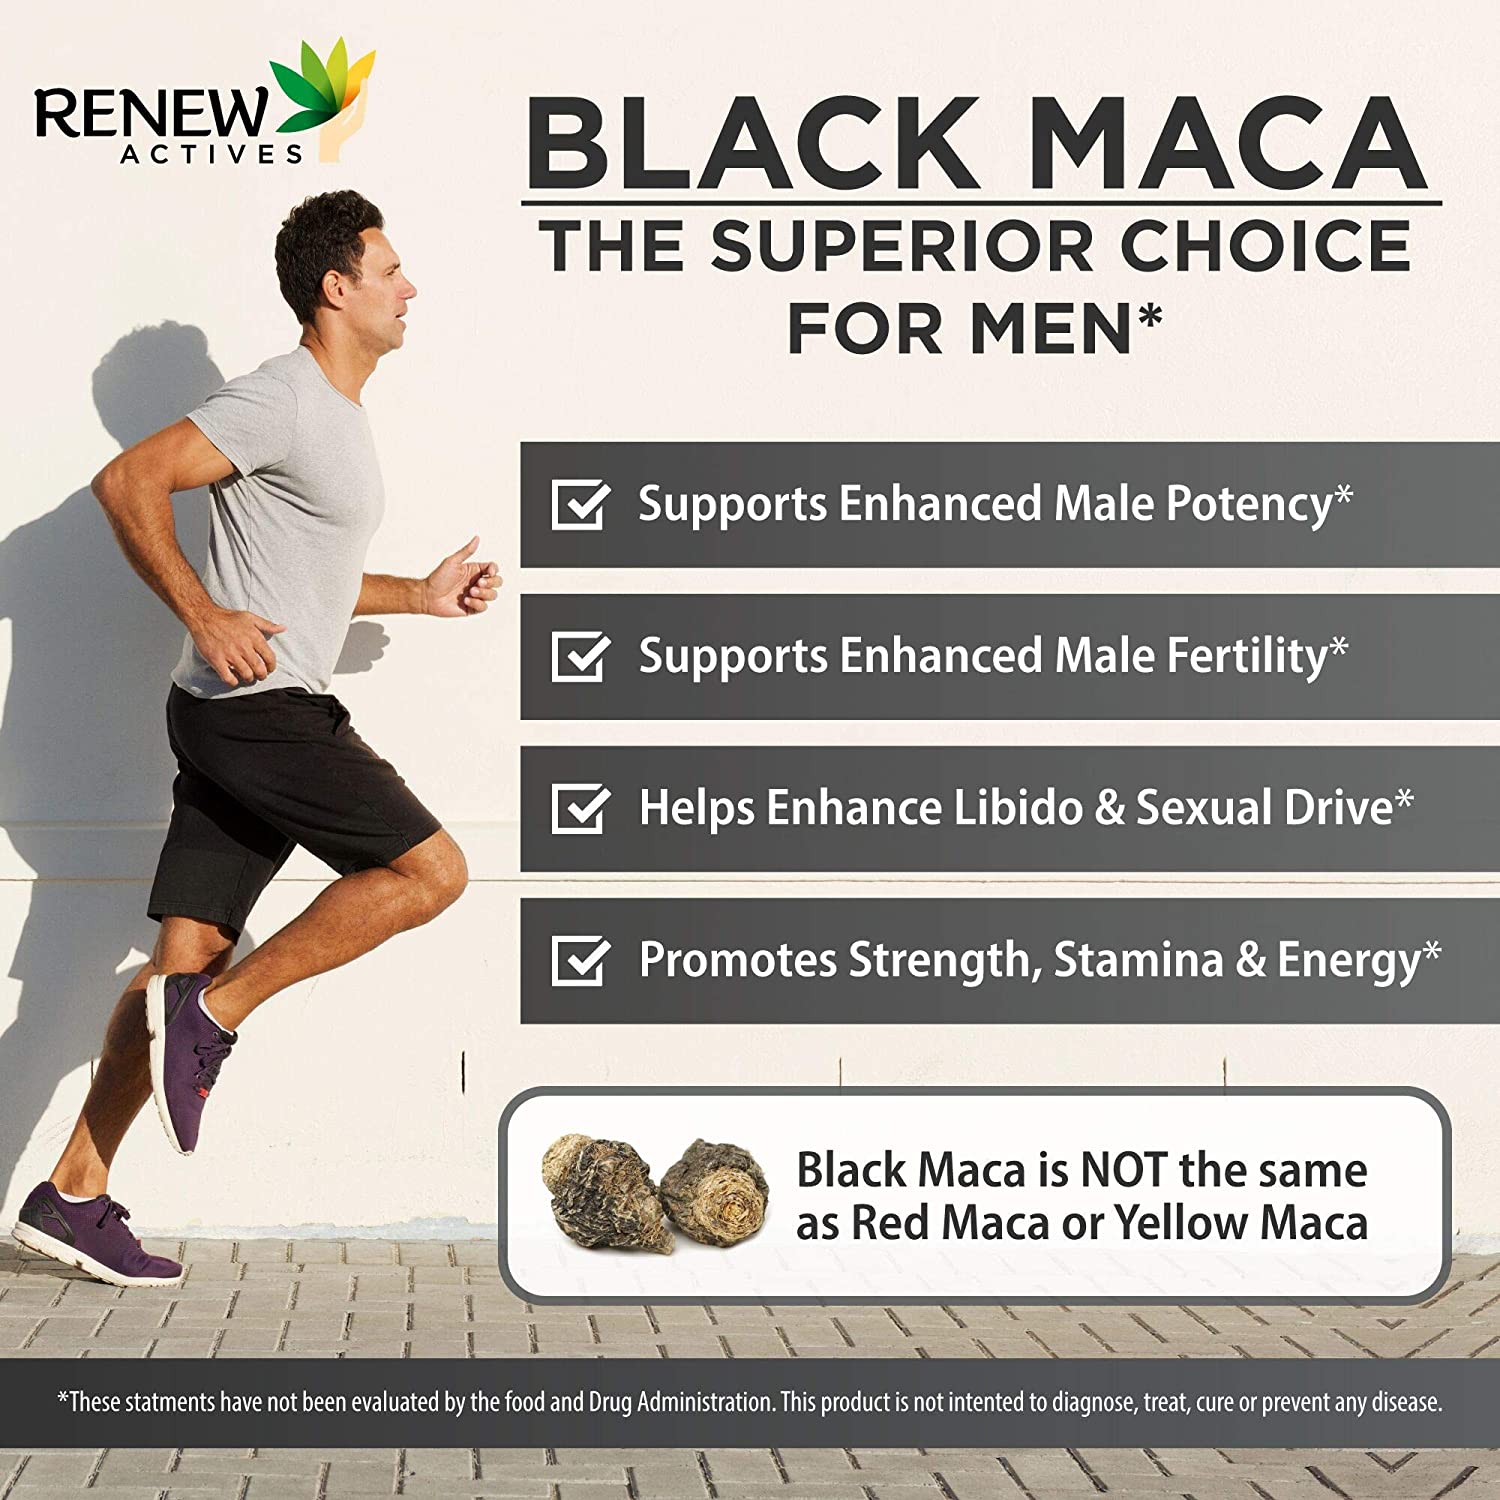 Organic Black Maca - 60 Capsules